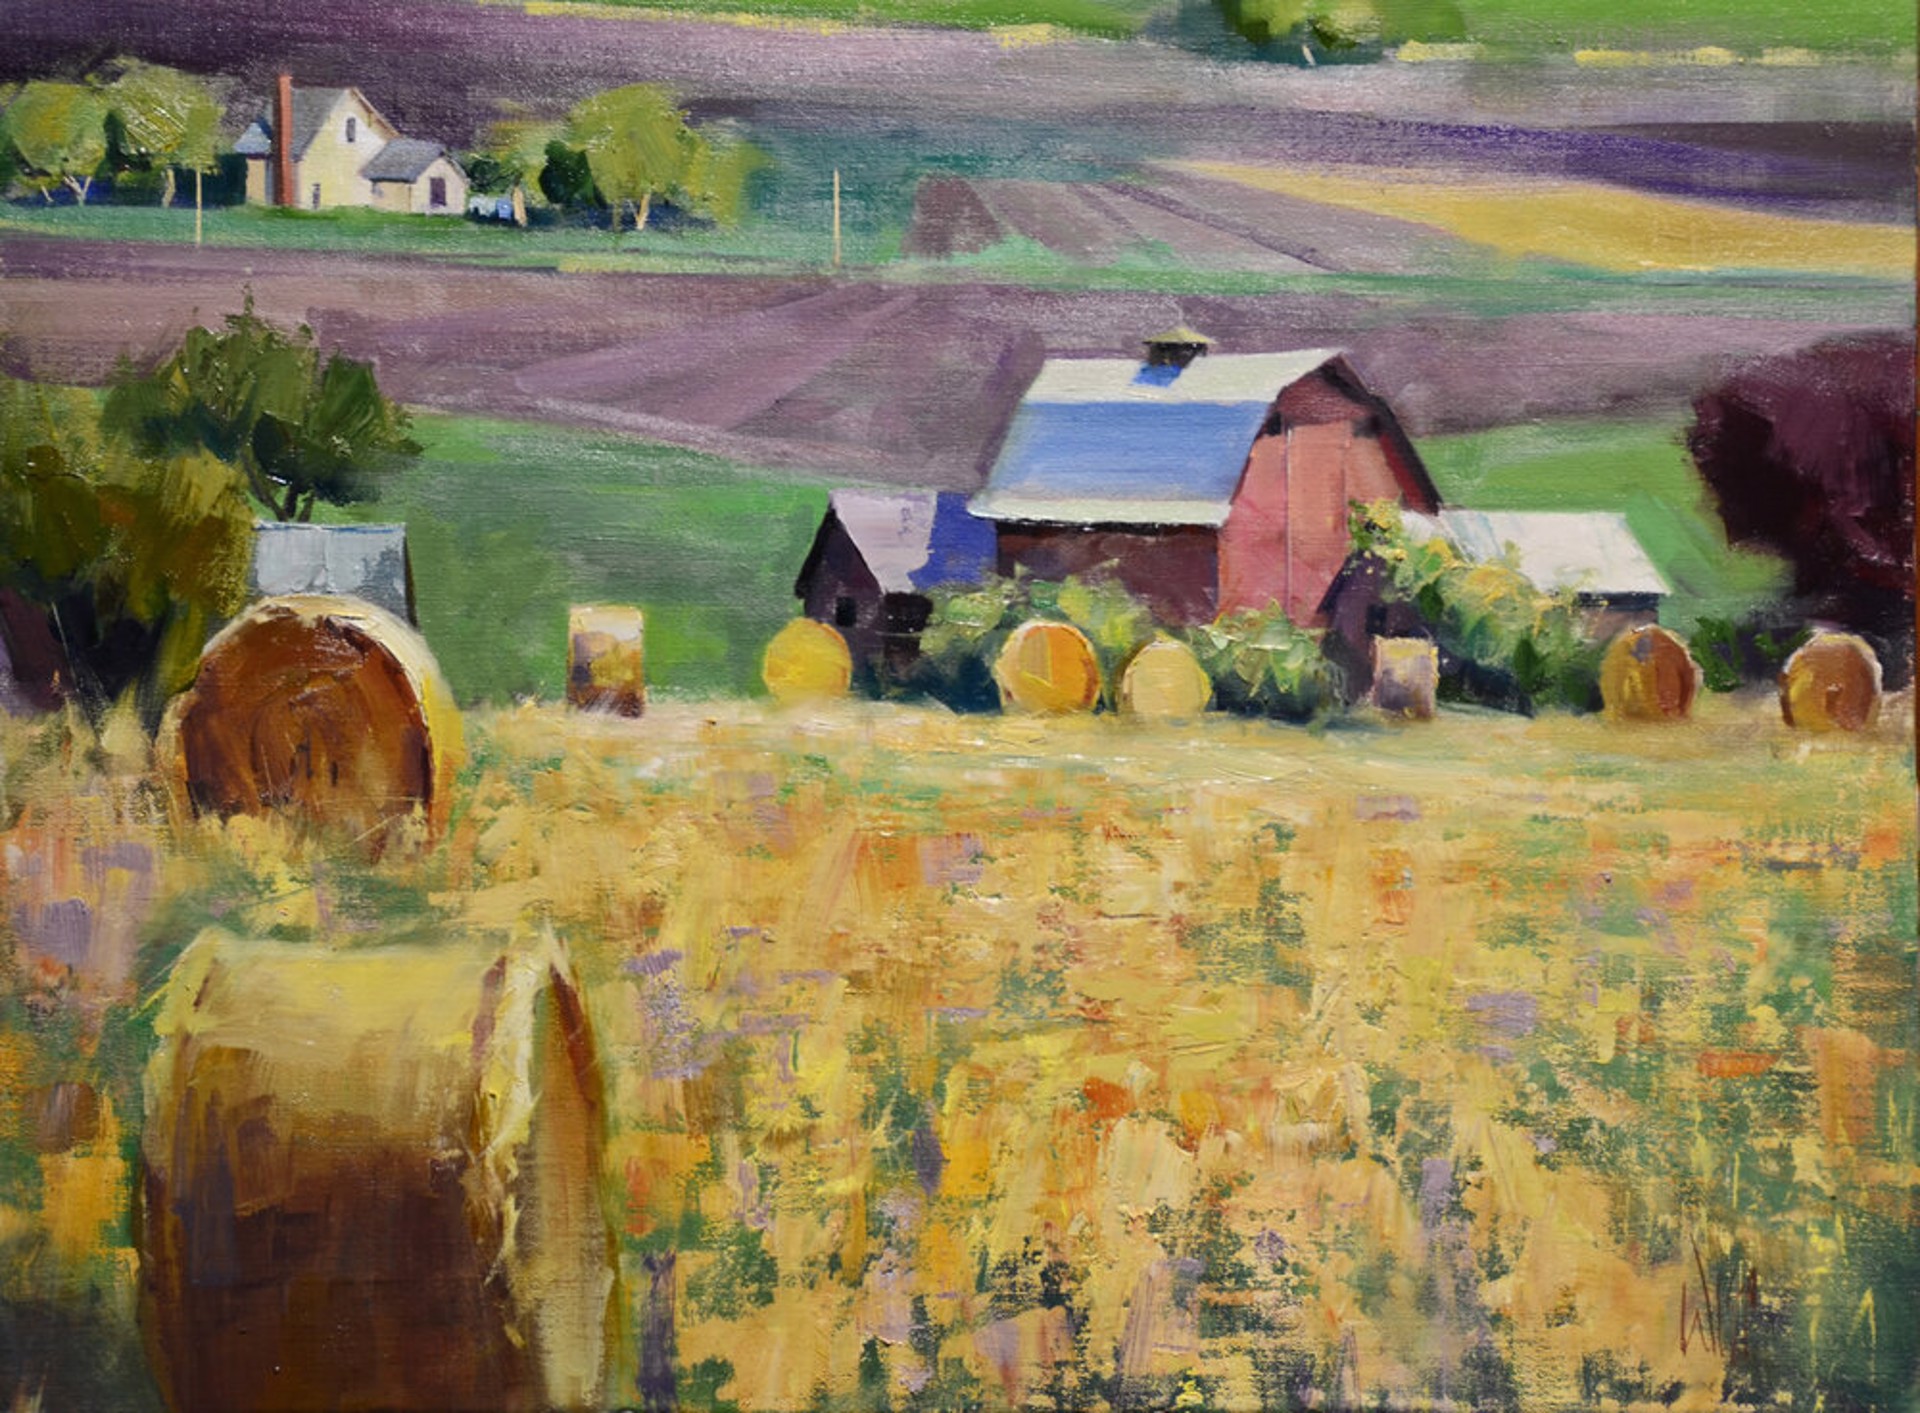 Prairie Fields by Mike Wise